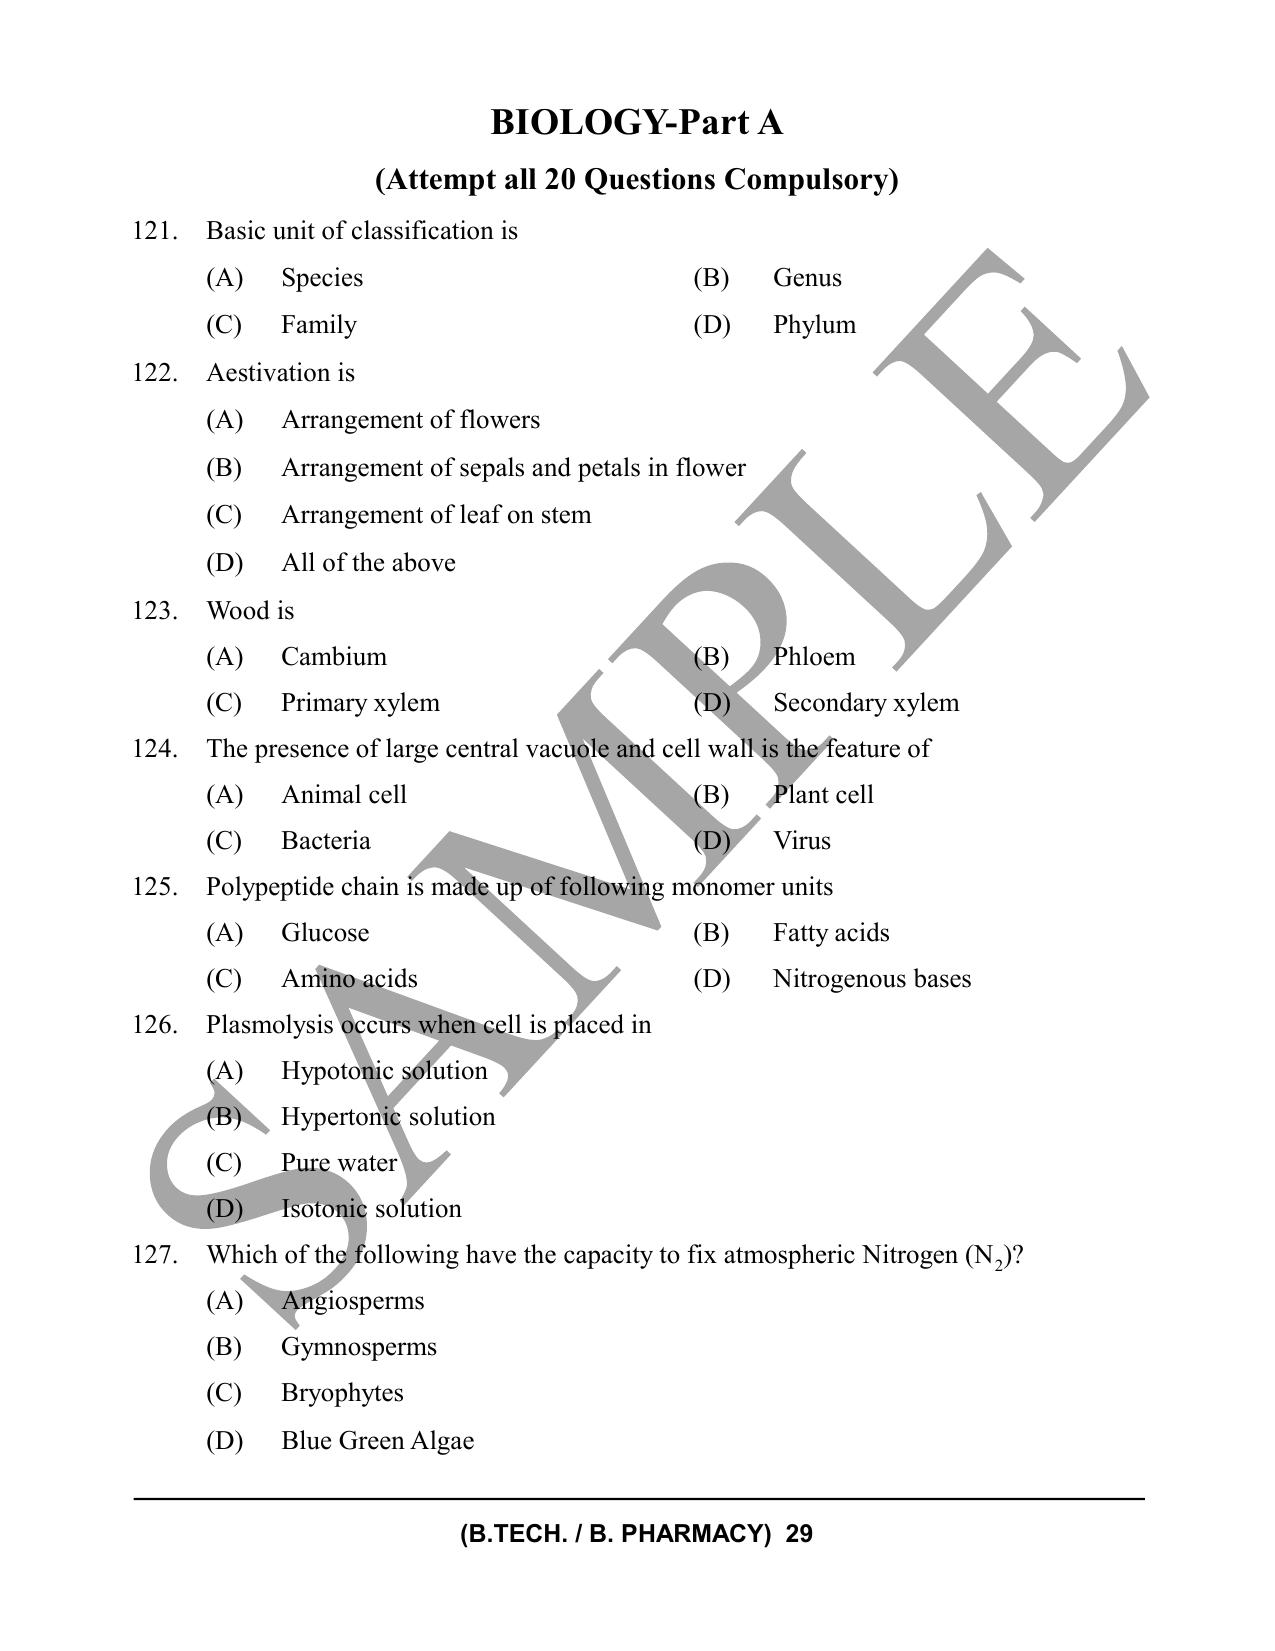 HPCET B. Tech. and B. Pharm. 2023 Sample Paper - Page 29